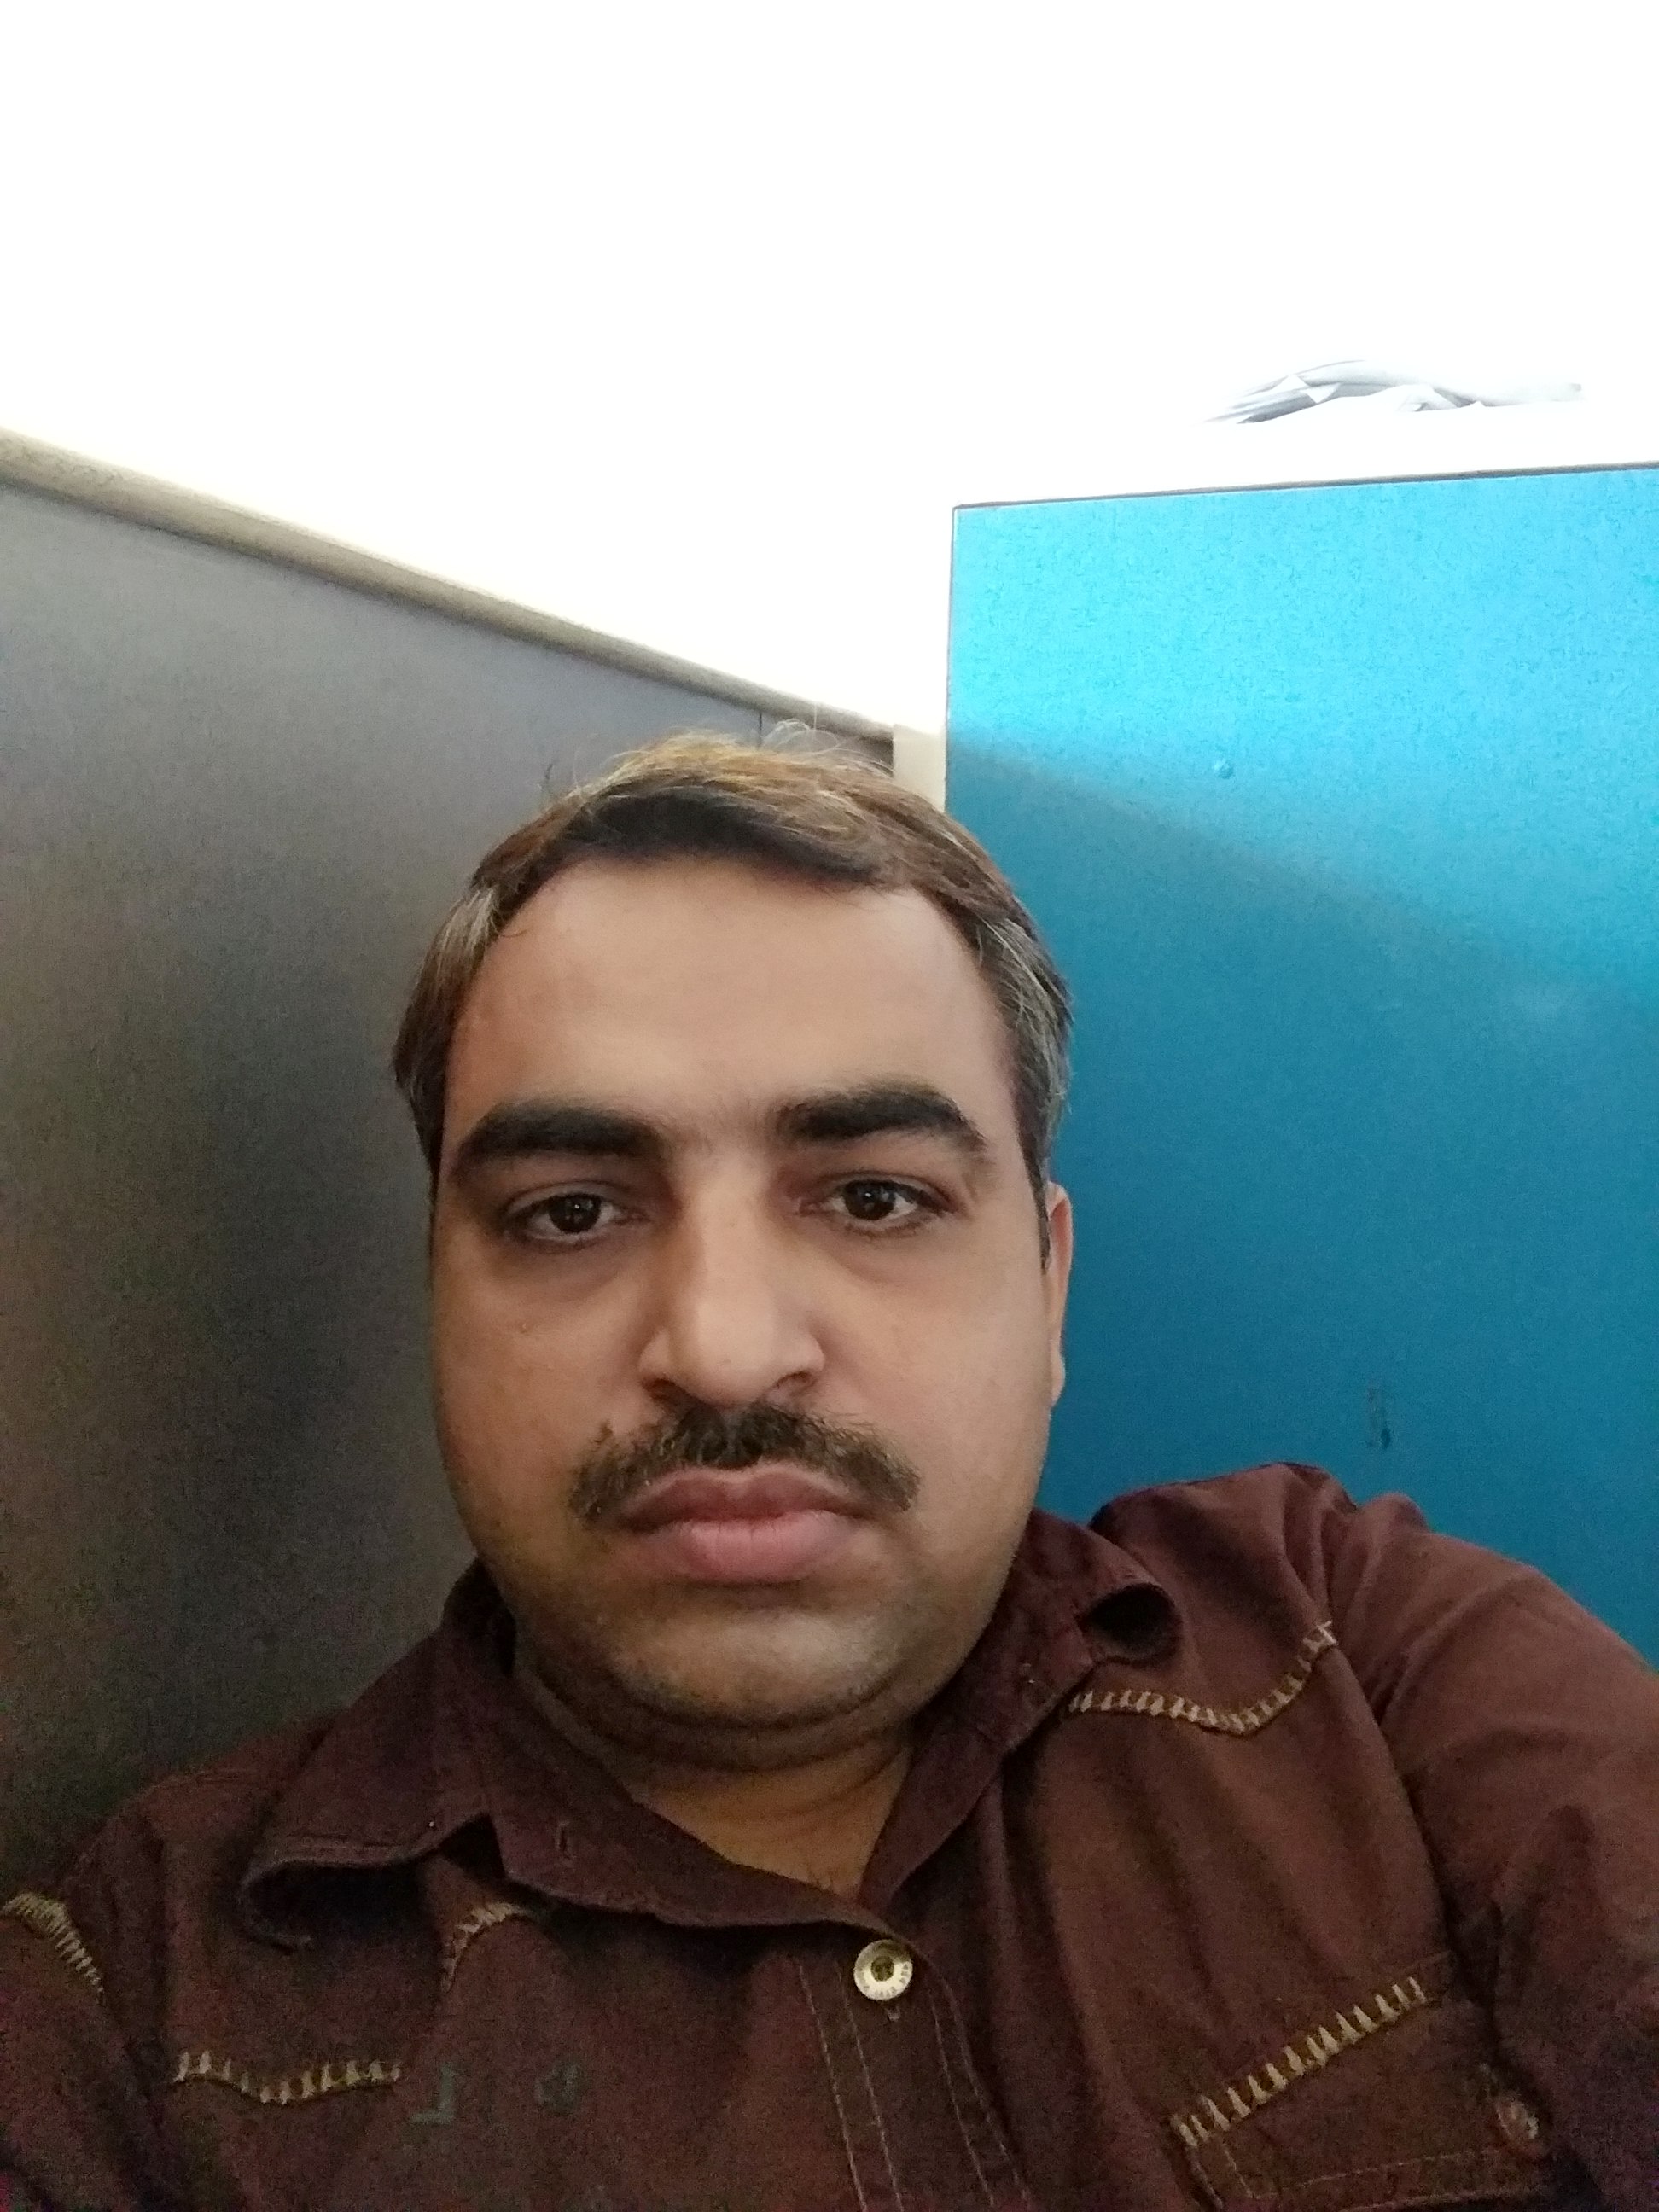 Anurag Awasthi